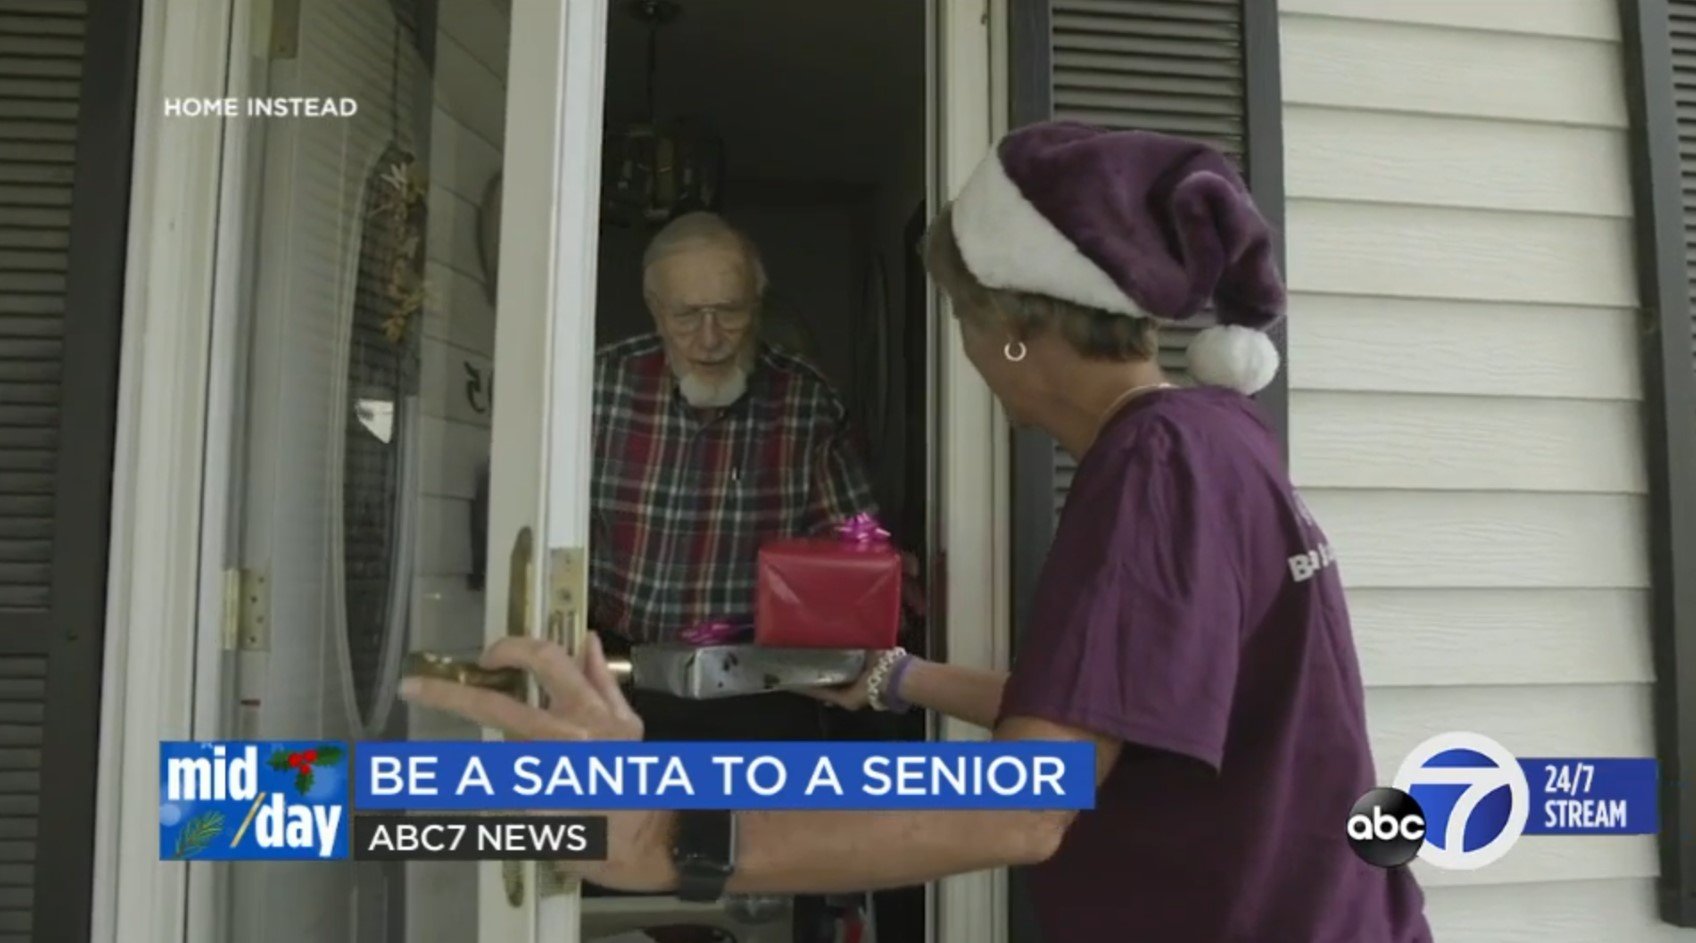 Home Instead's 'Be A Santa To A Senior' Program Feature ABC7 News